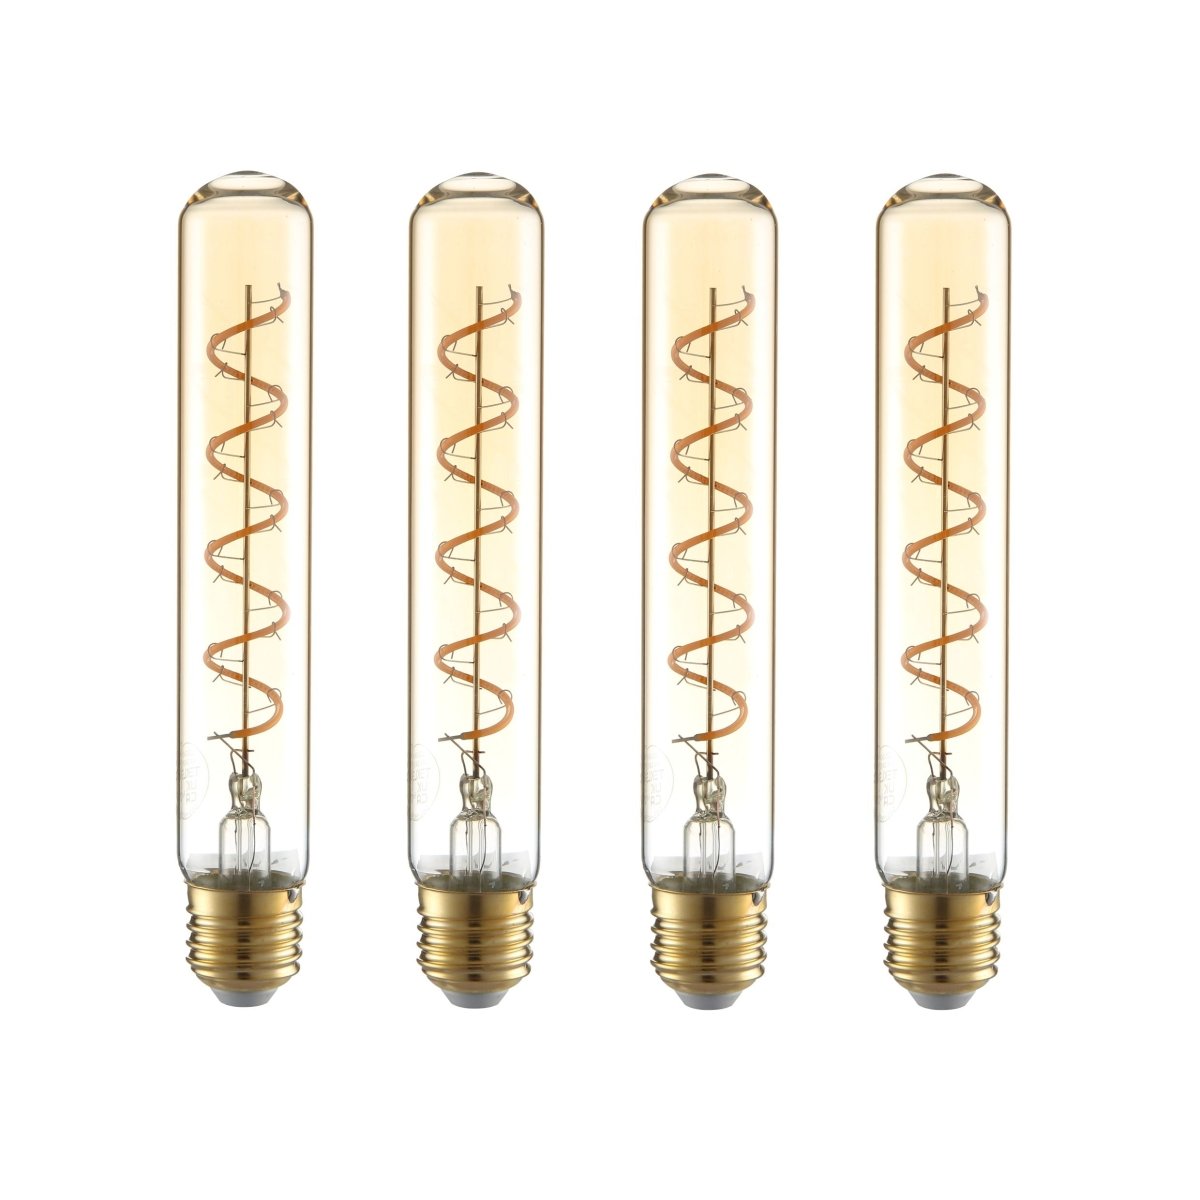 Main image of LED Dimmable Filament Bulb T30 Tubular E27 Edison Screw 4W 240lm 185mm Warm White 2400K Amber Pack of 4 | TEKLED 583-150565